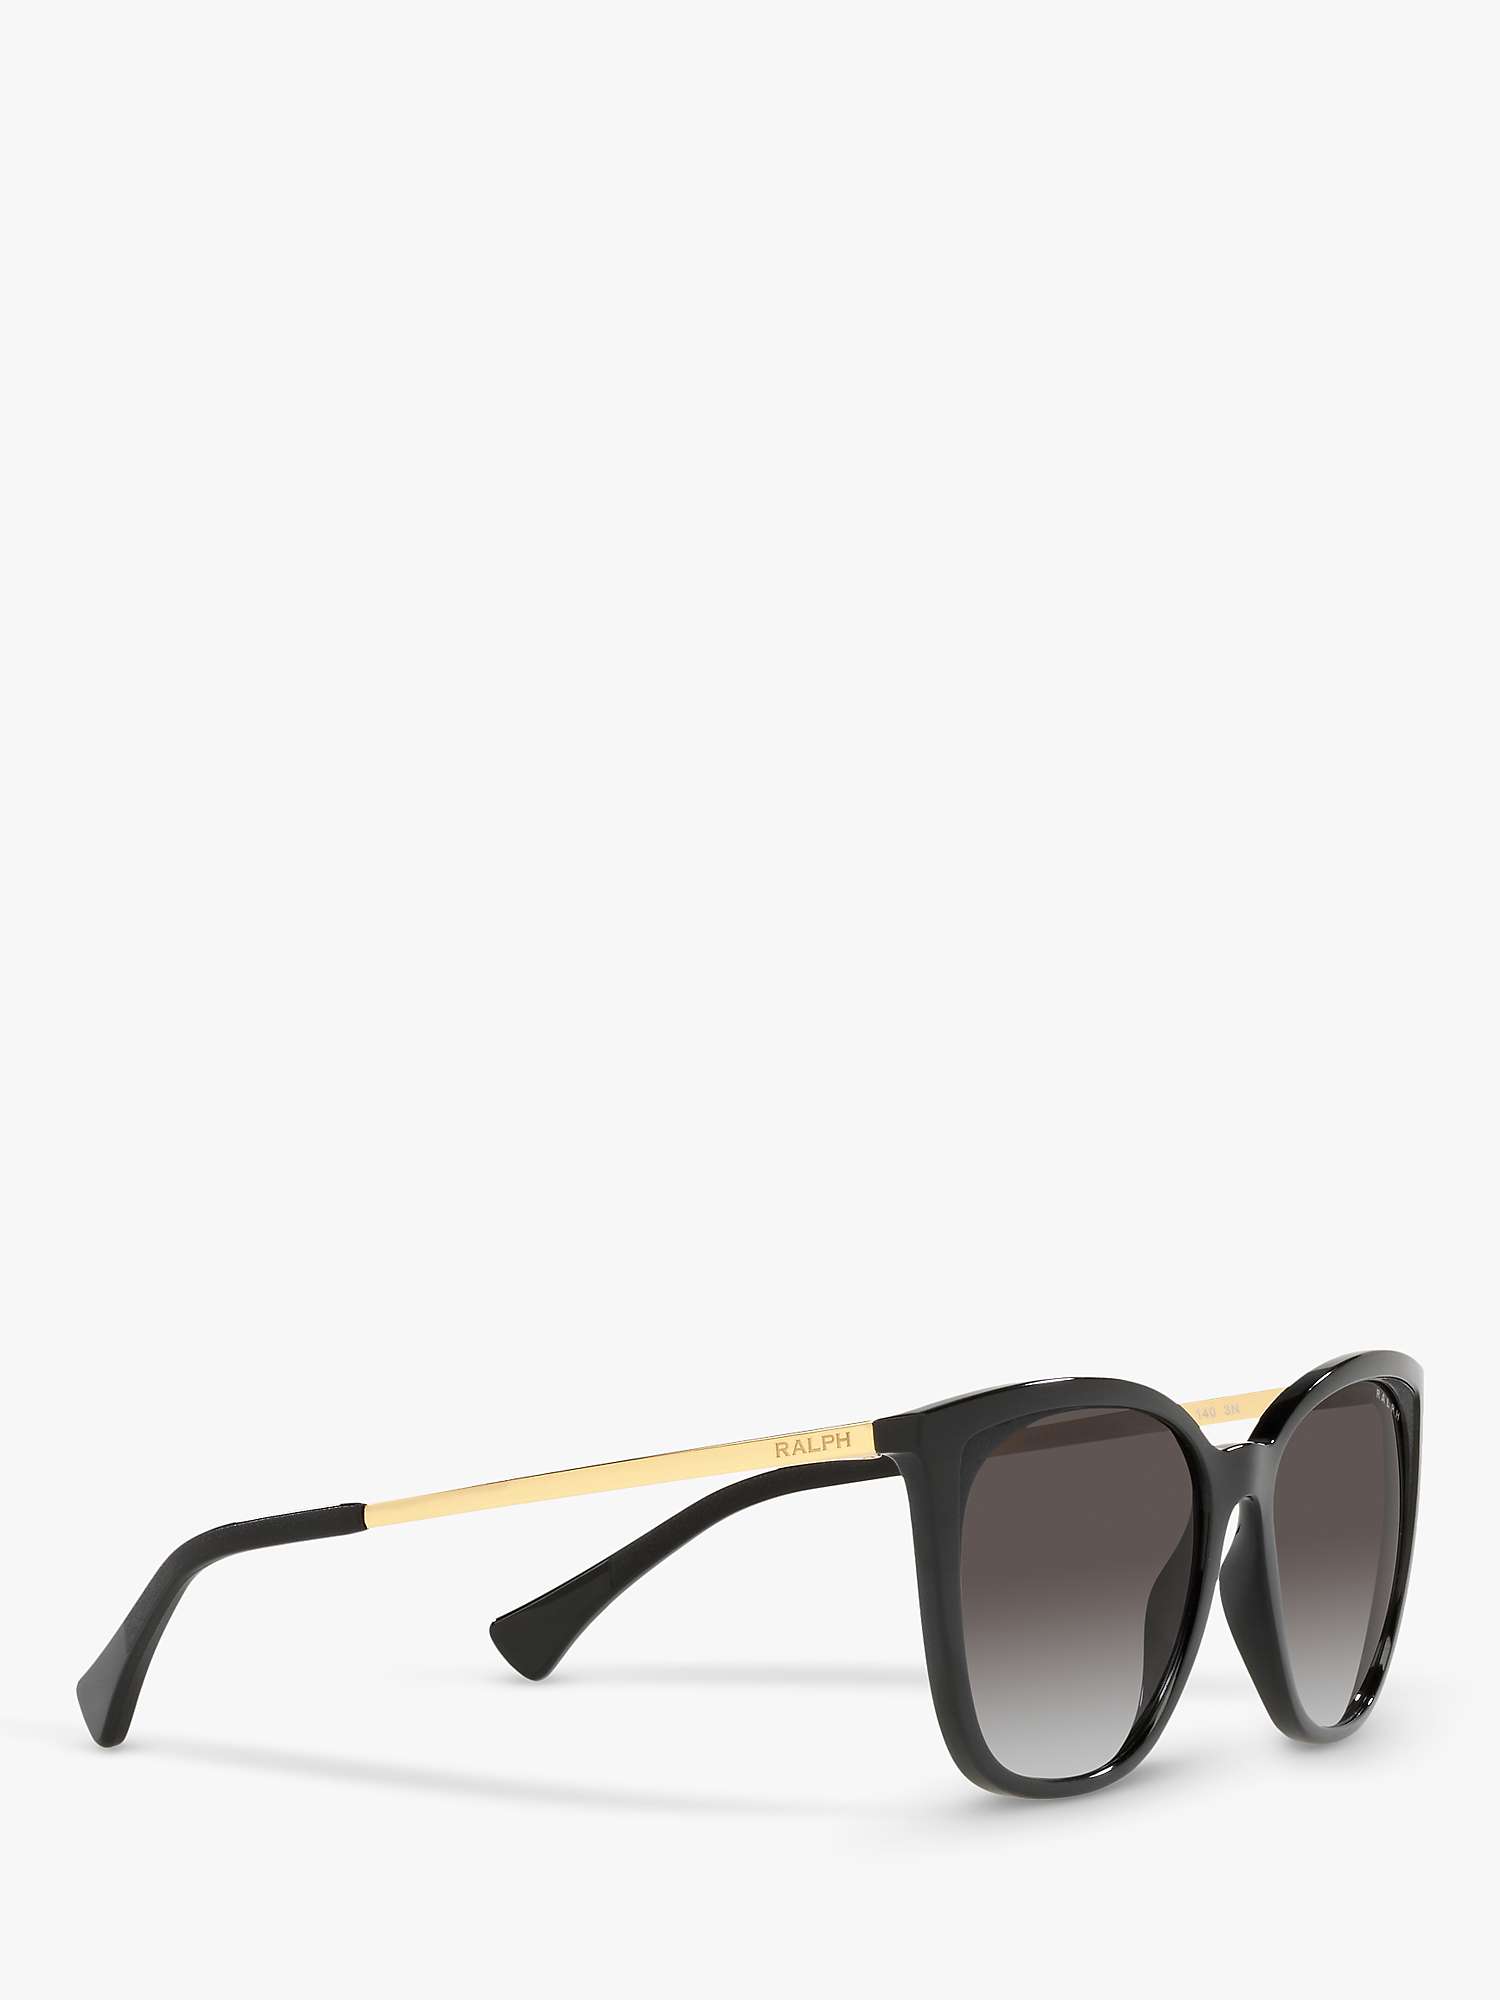 Buy Ralph RA5280 Women's Cat's Eye Sunglasses, Shiny Black/Grey Gradient Online at johnlewis.com